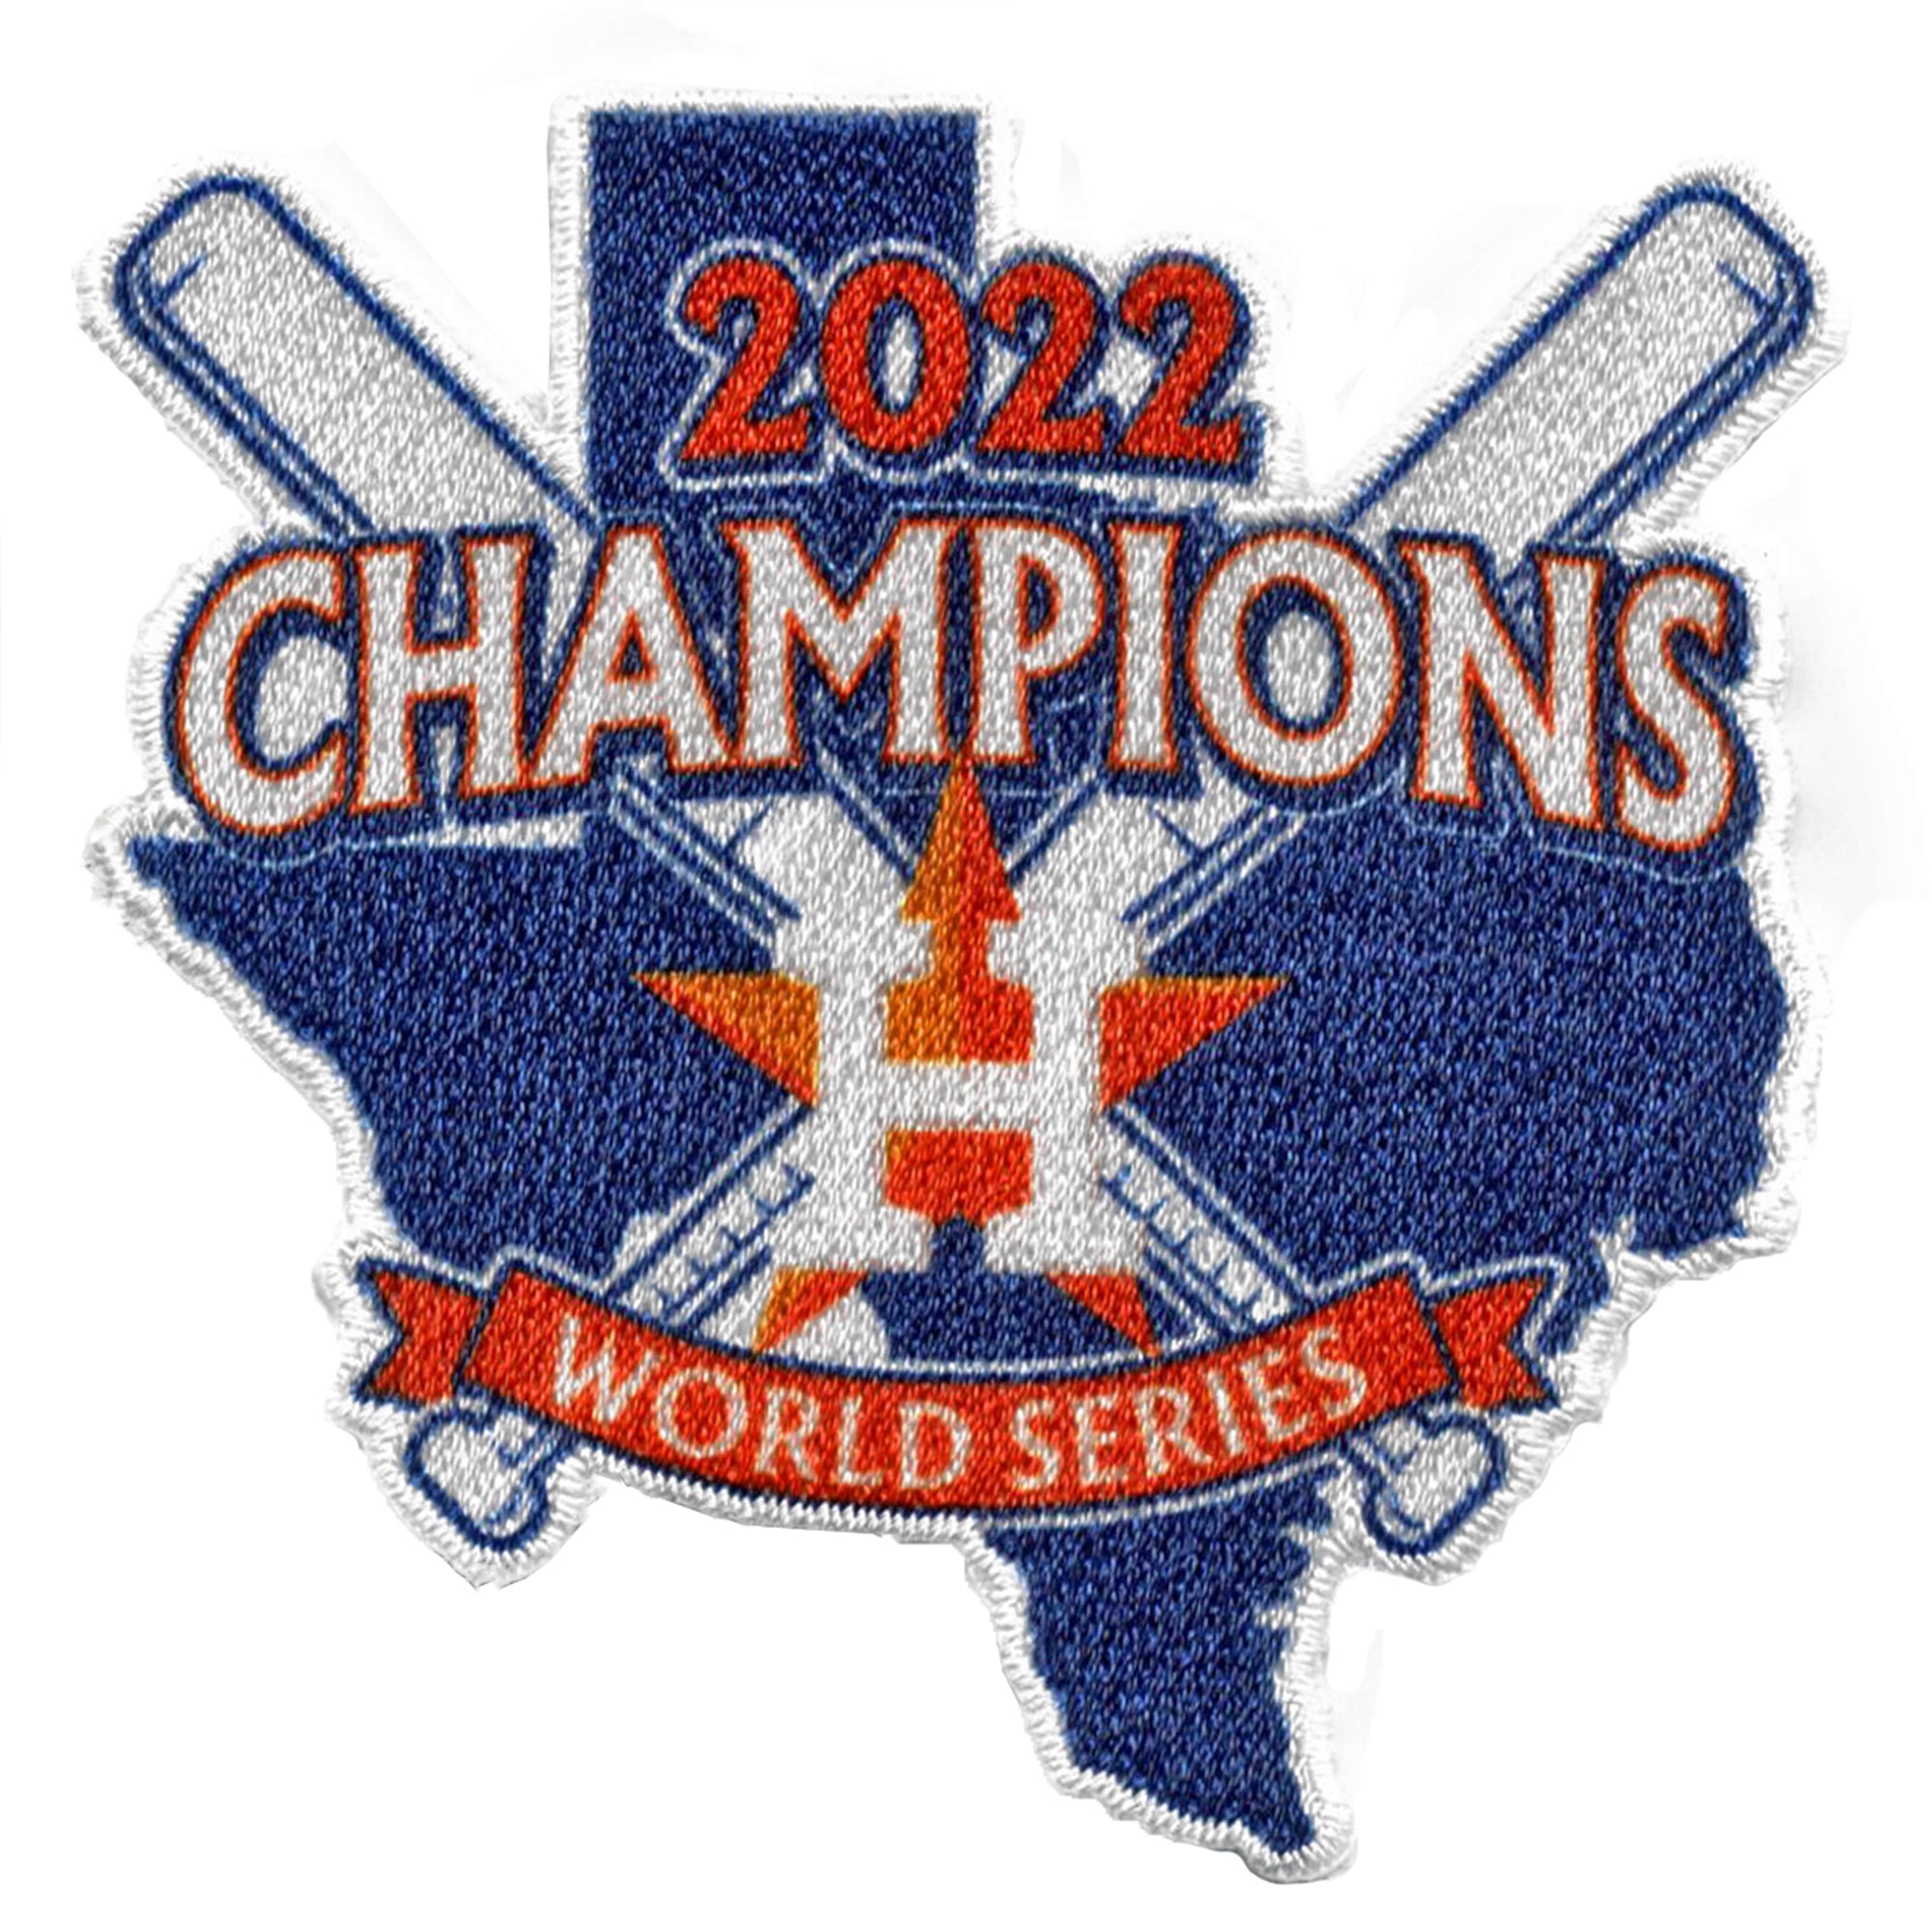 world series champions 2022 astros